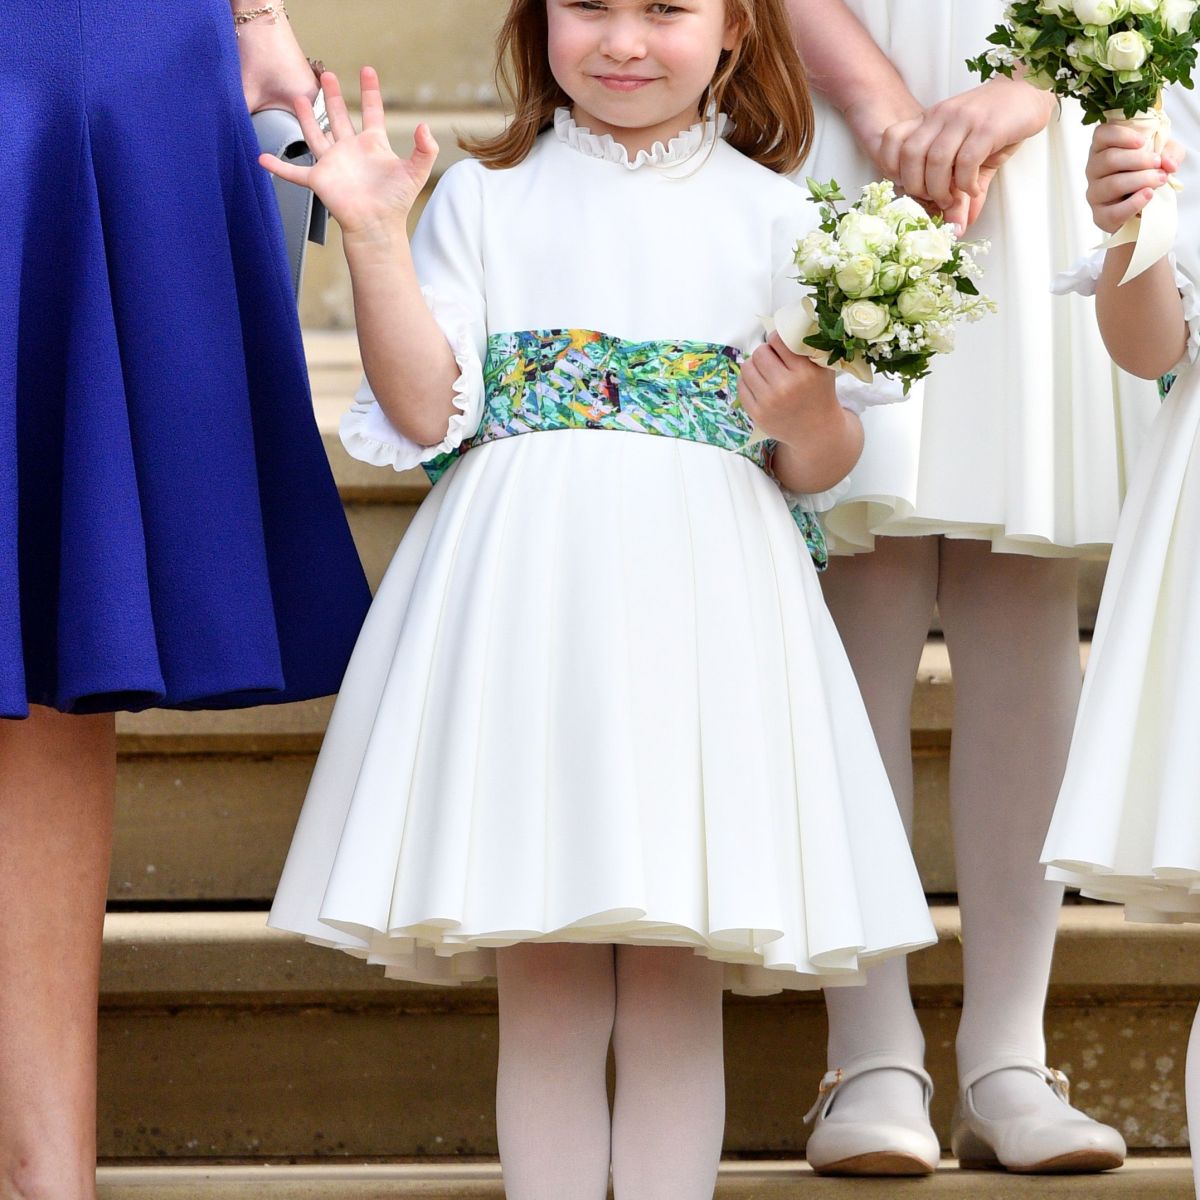 Kate Middleton Prince William S Kids Meet Their Royal Children